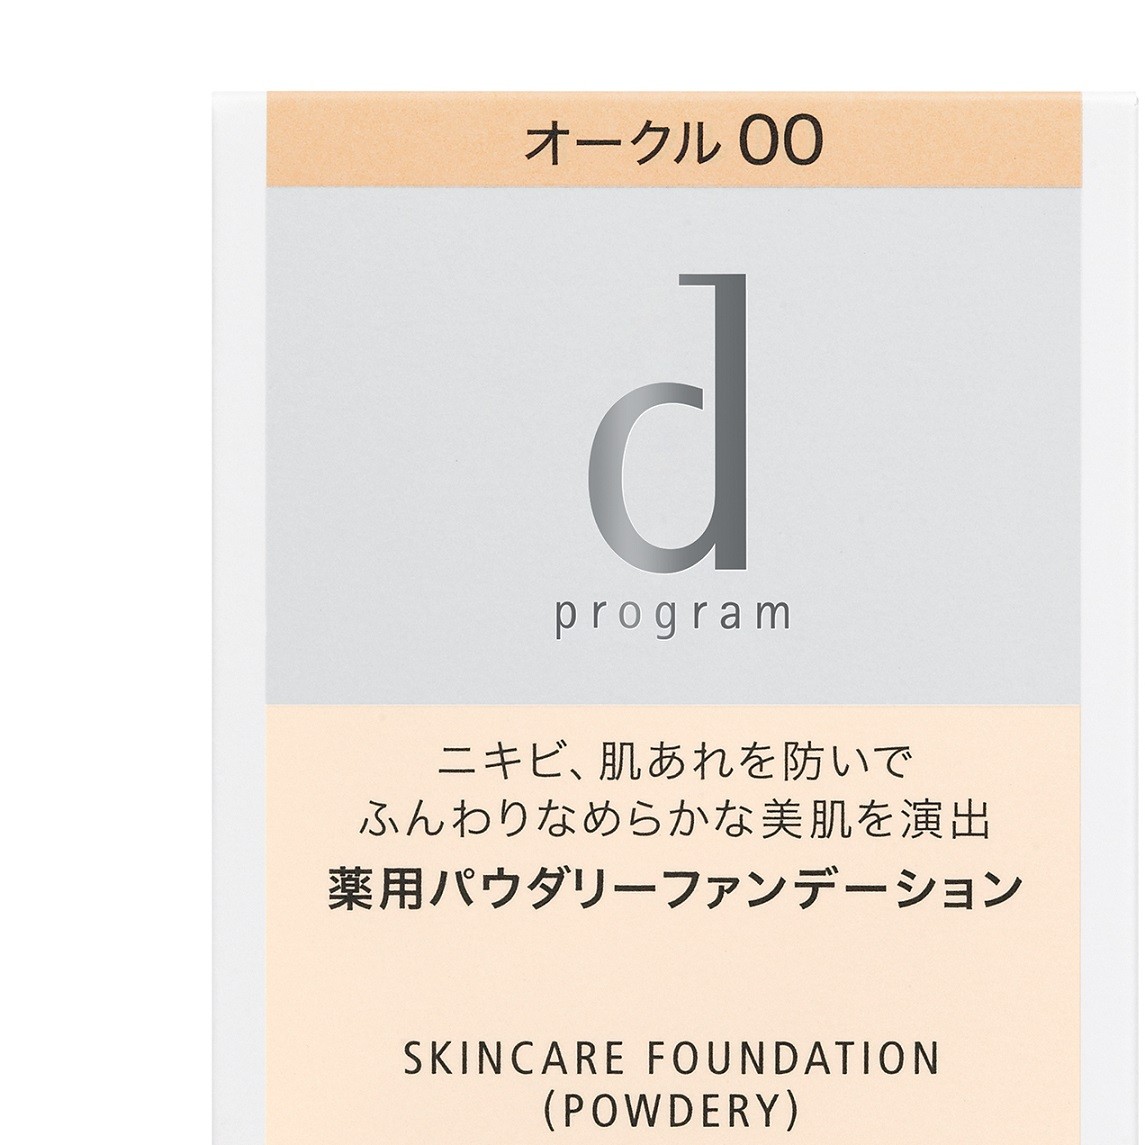 * Shiseido recognition shop medicine for skin care foundation ( powder Lee ) oak ru00(re Phil ) free shipping. takkyubin (home delivery service) same etc. delivery number of days 